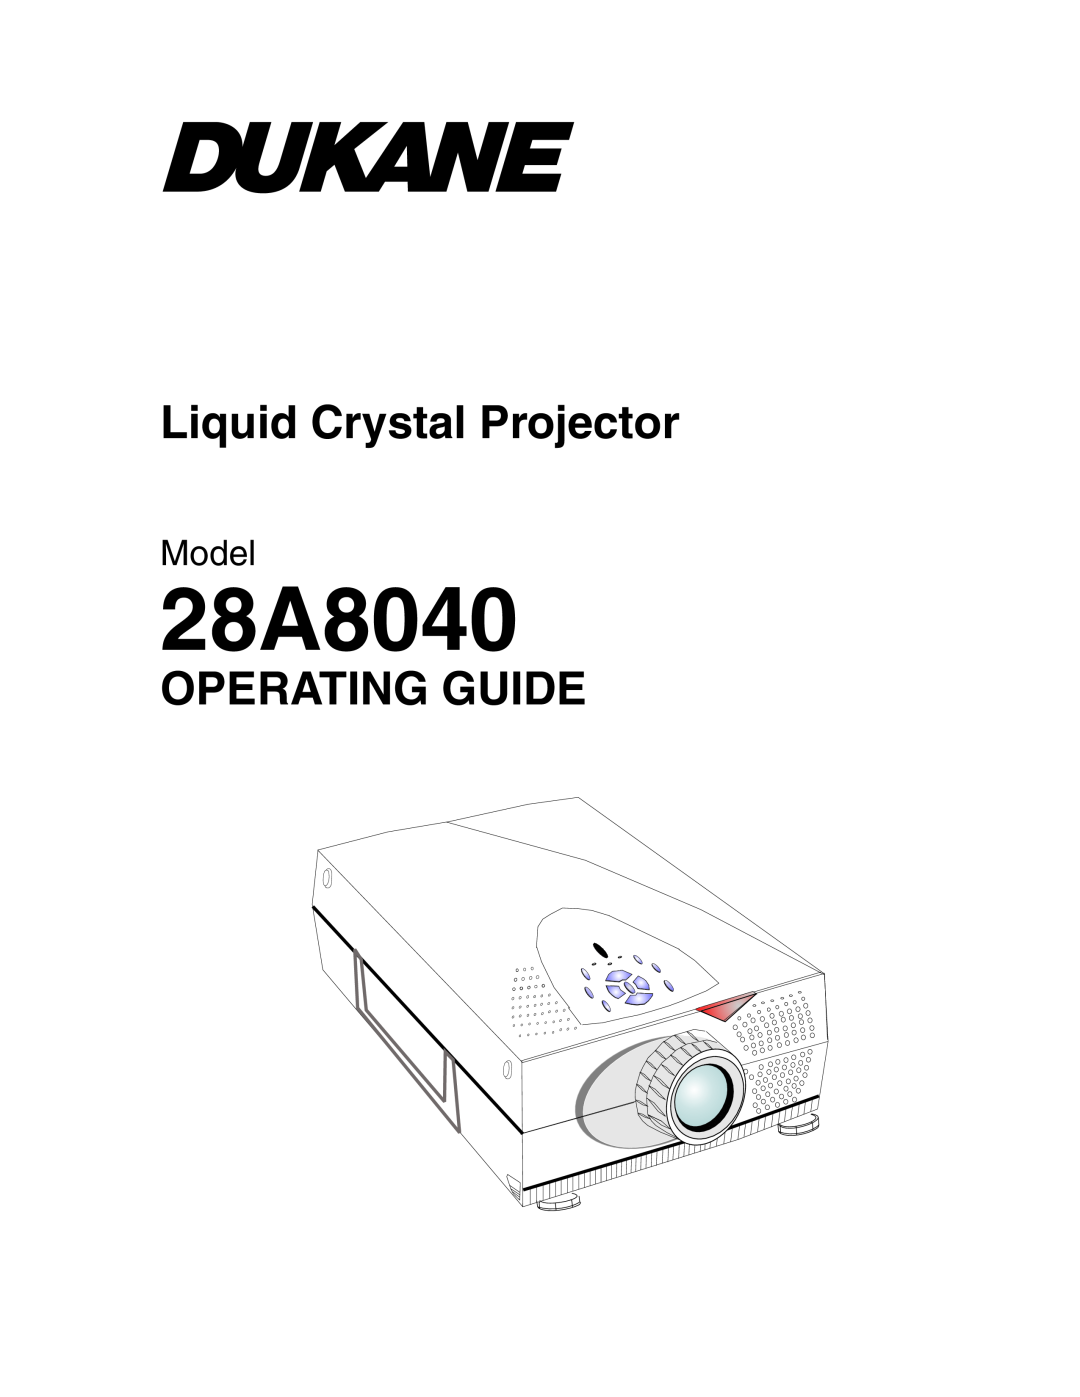 Dukane 28A8040 manual Liquid Crystal Projector, Operating Guide, Model 